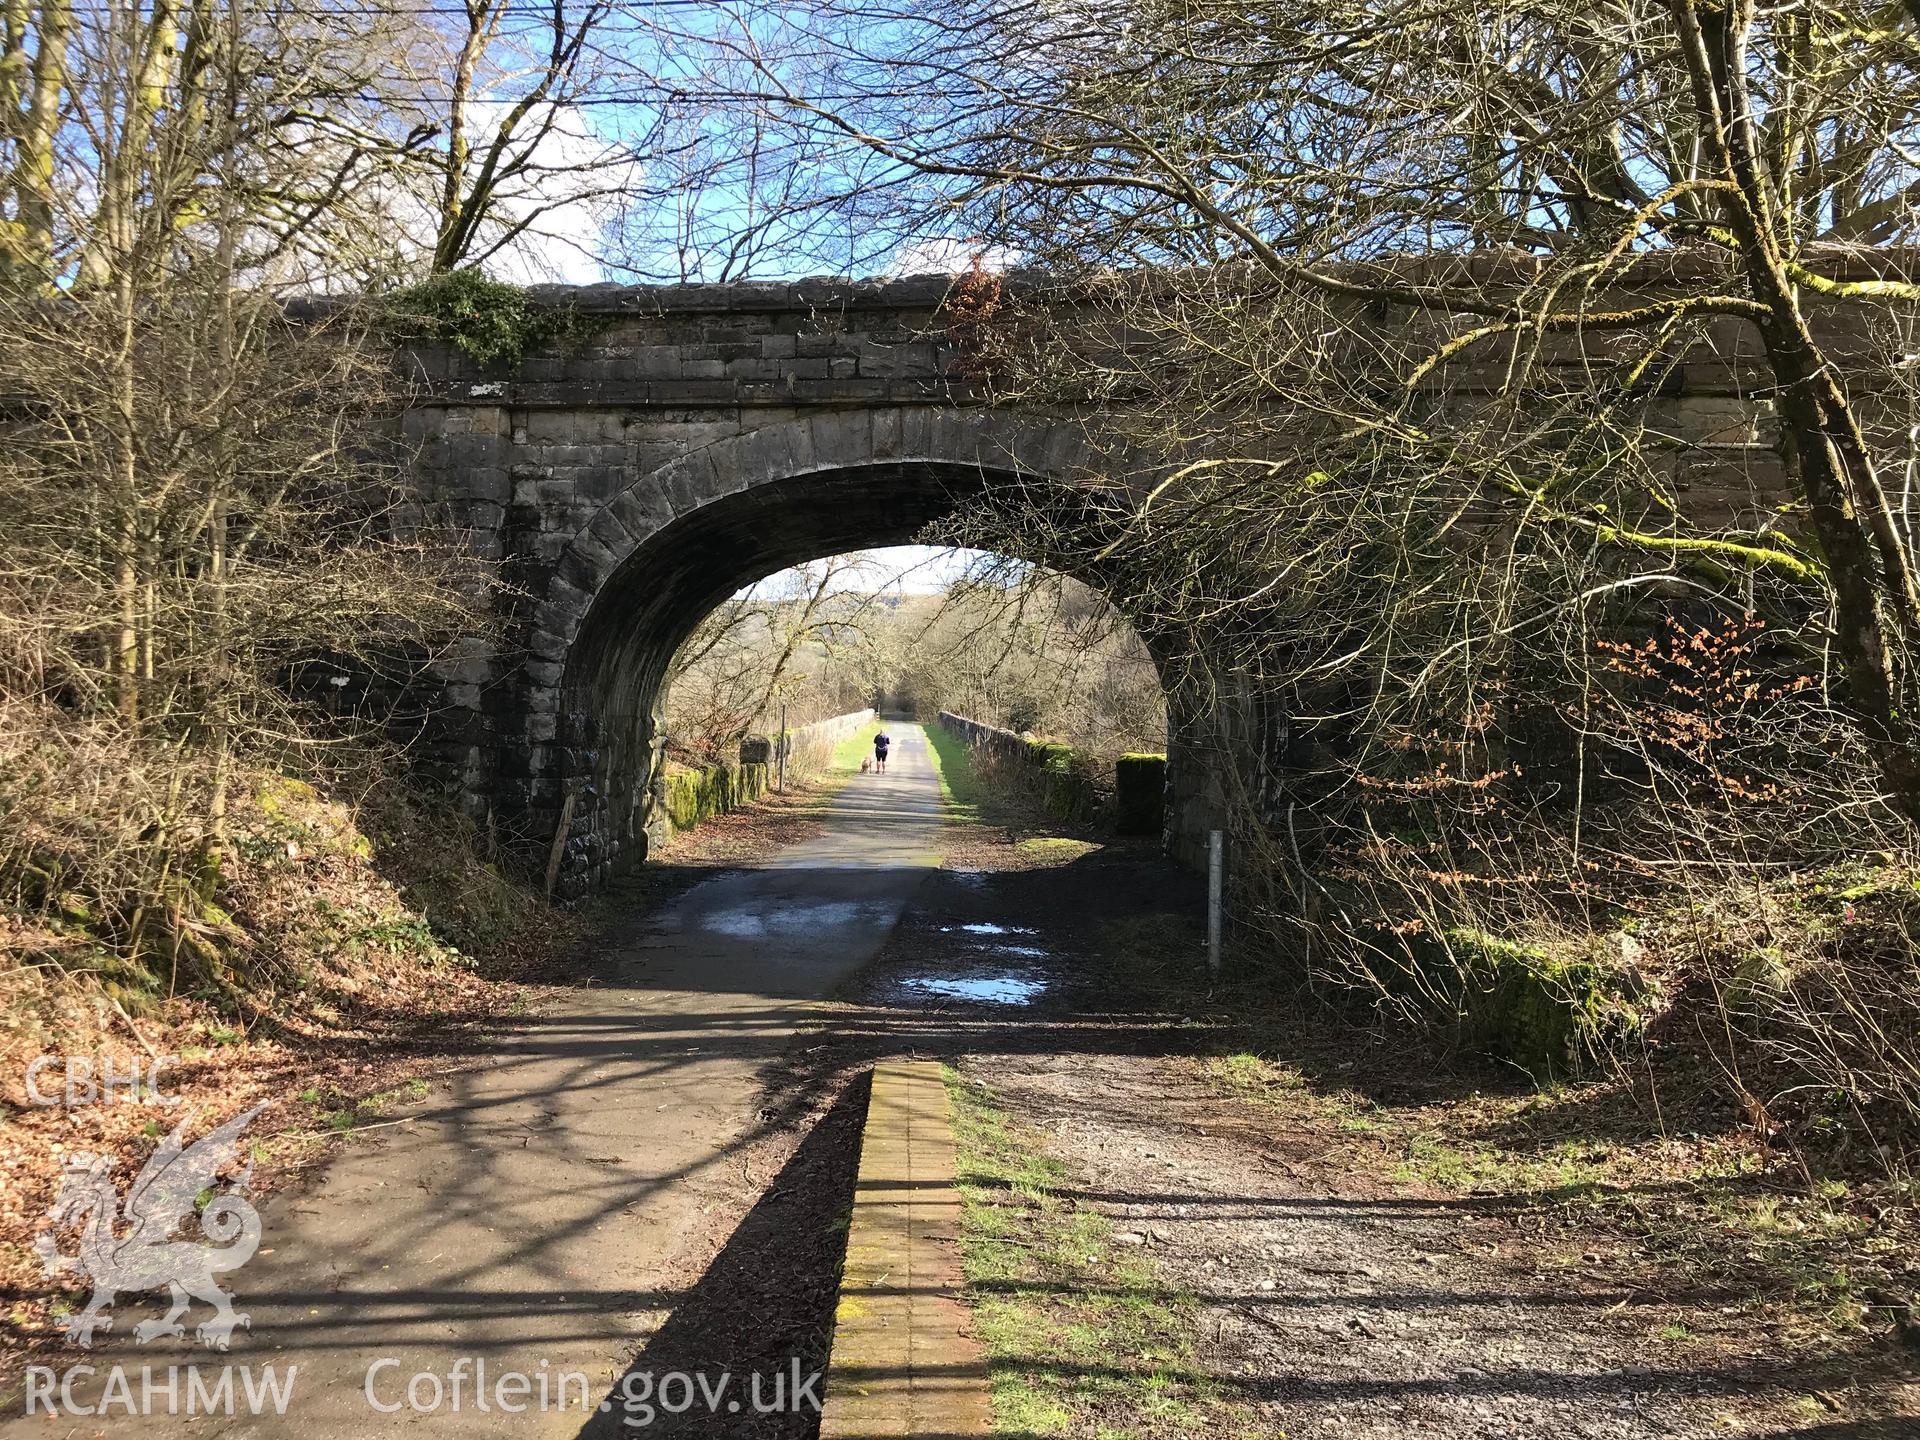 Digital colour photograph of Pontsarn railway viaduct, Merthyr Tydfil, taken by Paul R. Davis on 17th March 2019.